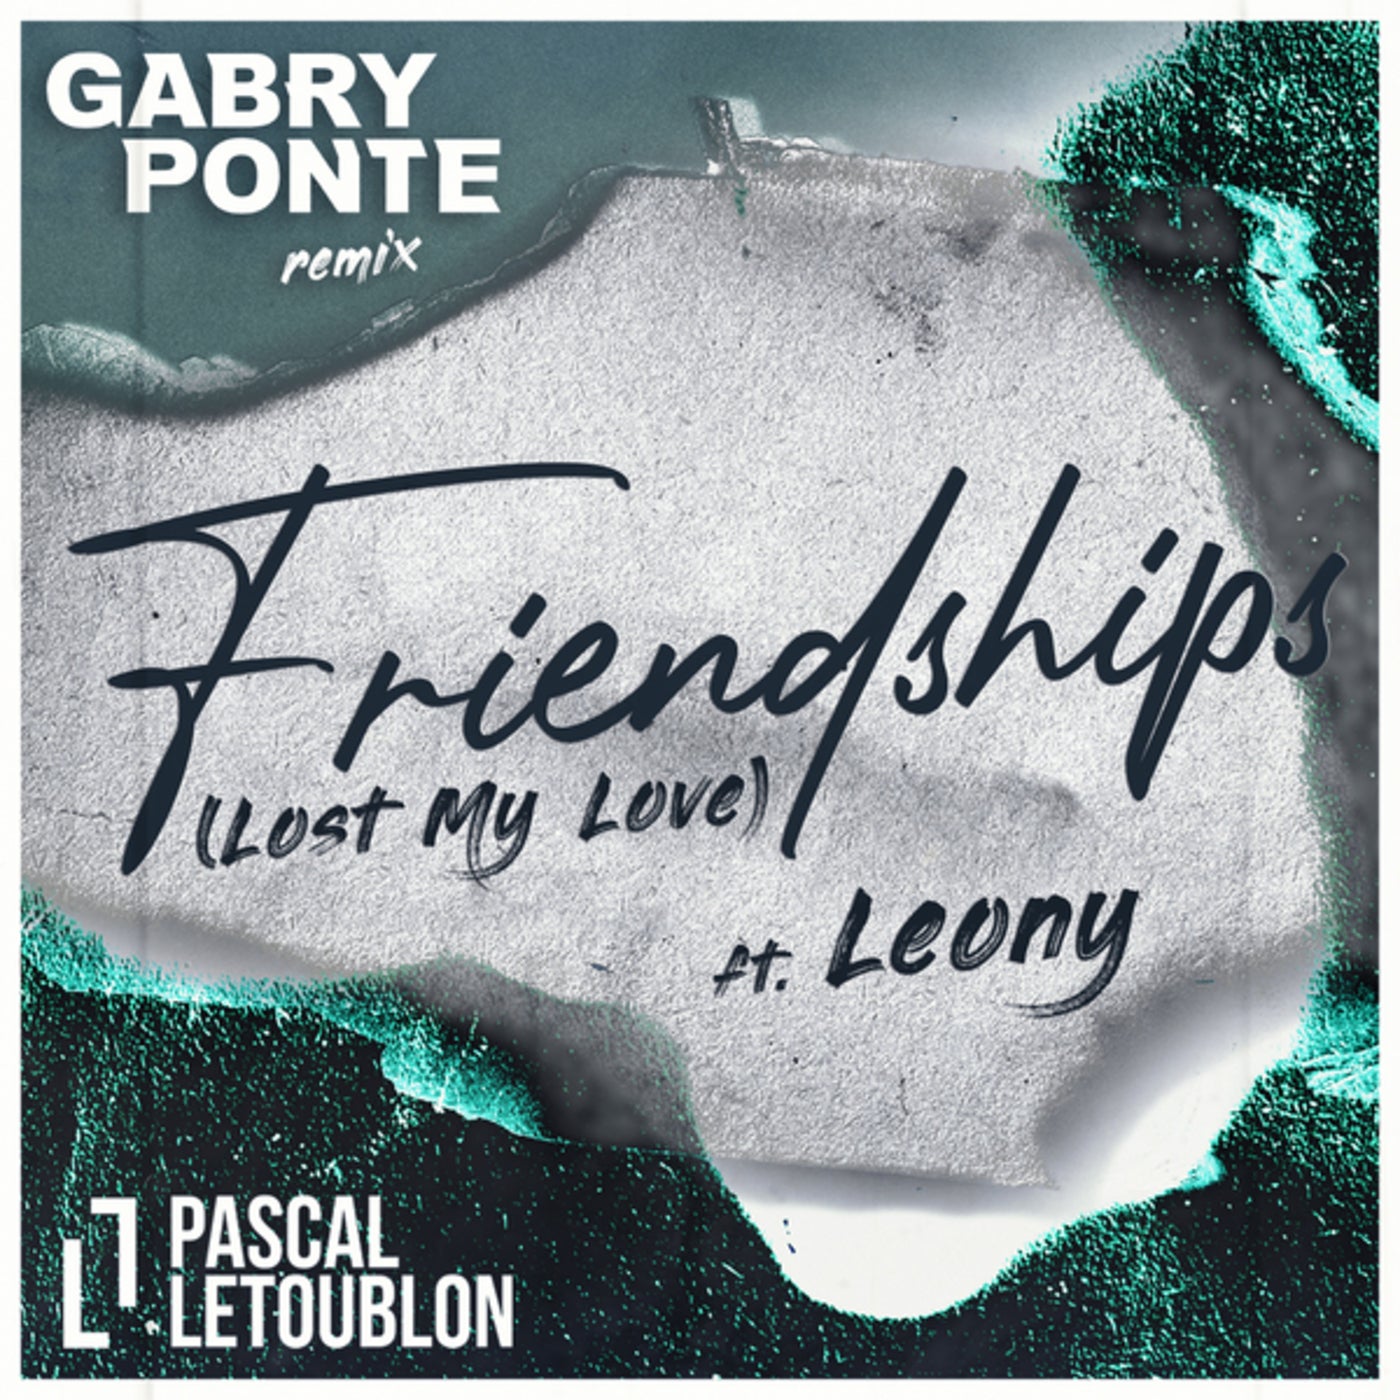 Паскаль летоублон френдшип. Pascal Letoublon Friendships. Pascal Letoublon, Leony - Friendships (Lost my Love). Gabry Ponte 2022. Friendships (Lost my Love) [feat. Leony!].